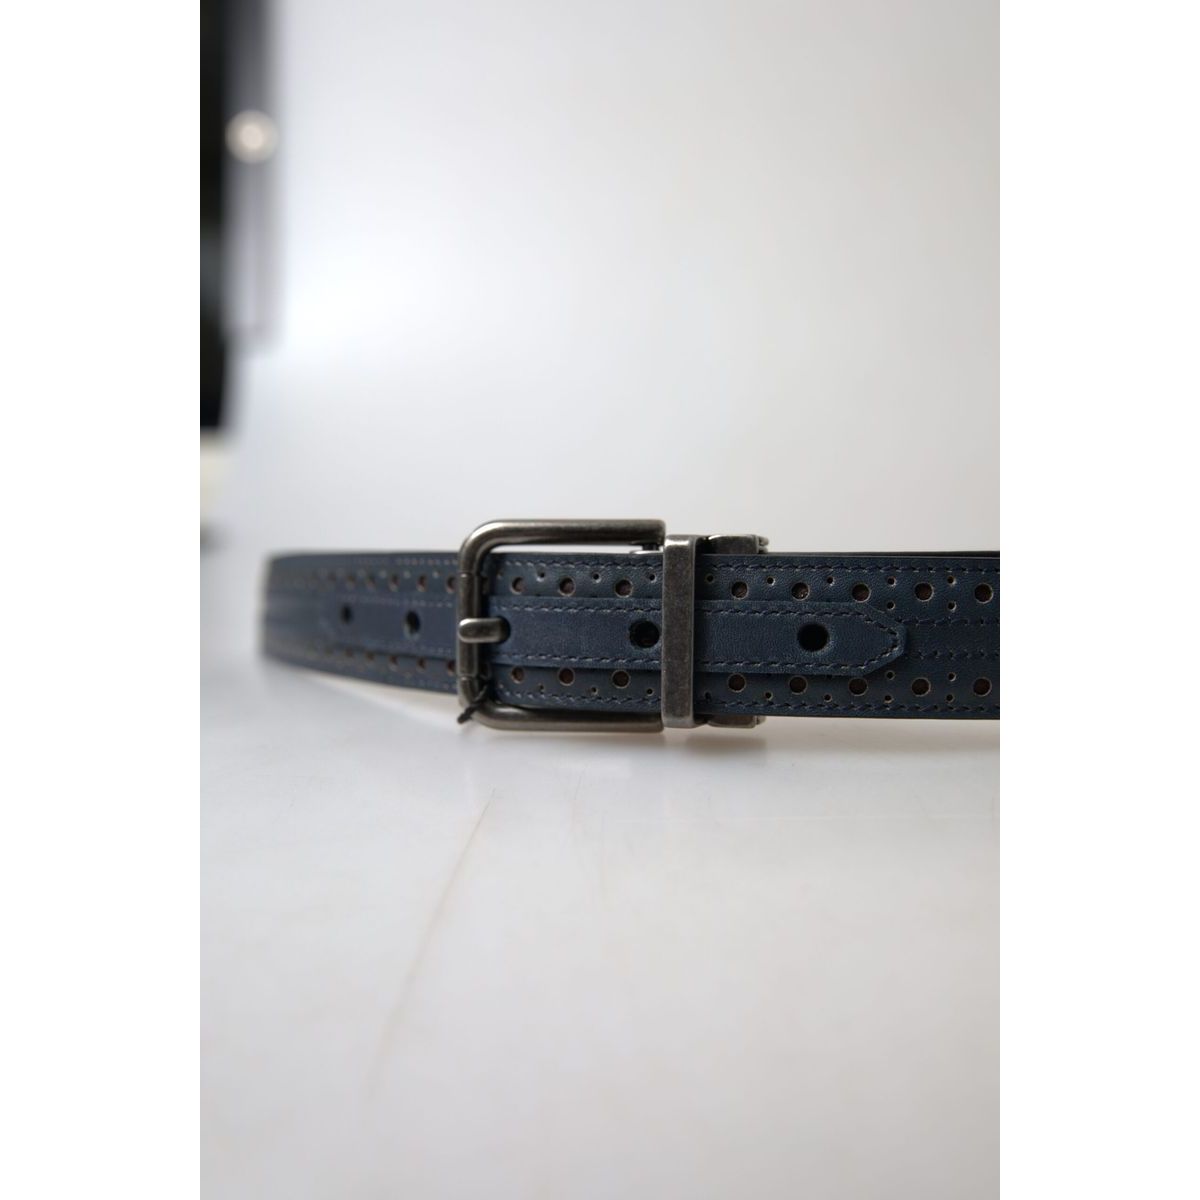 Dolce & Gabbana Elegant Blue Leather Belt with Metal Buckle MAN BELTS blue-leather-perforated-metal-buckle-belt